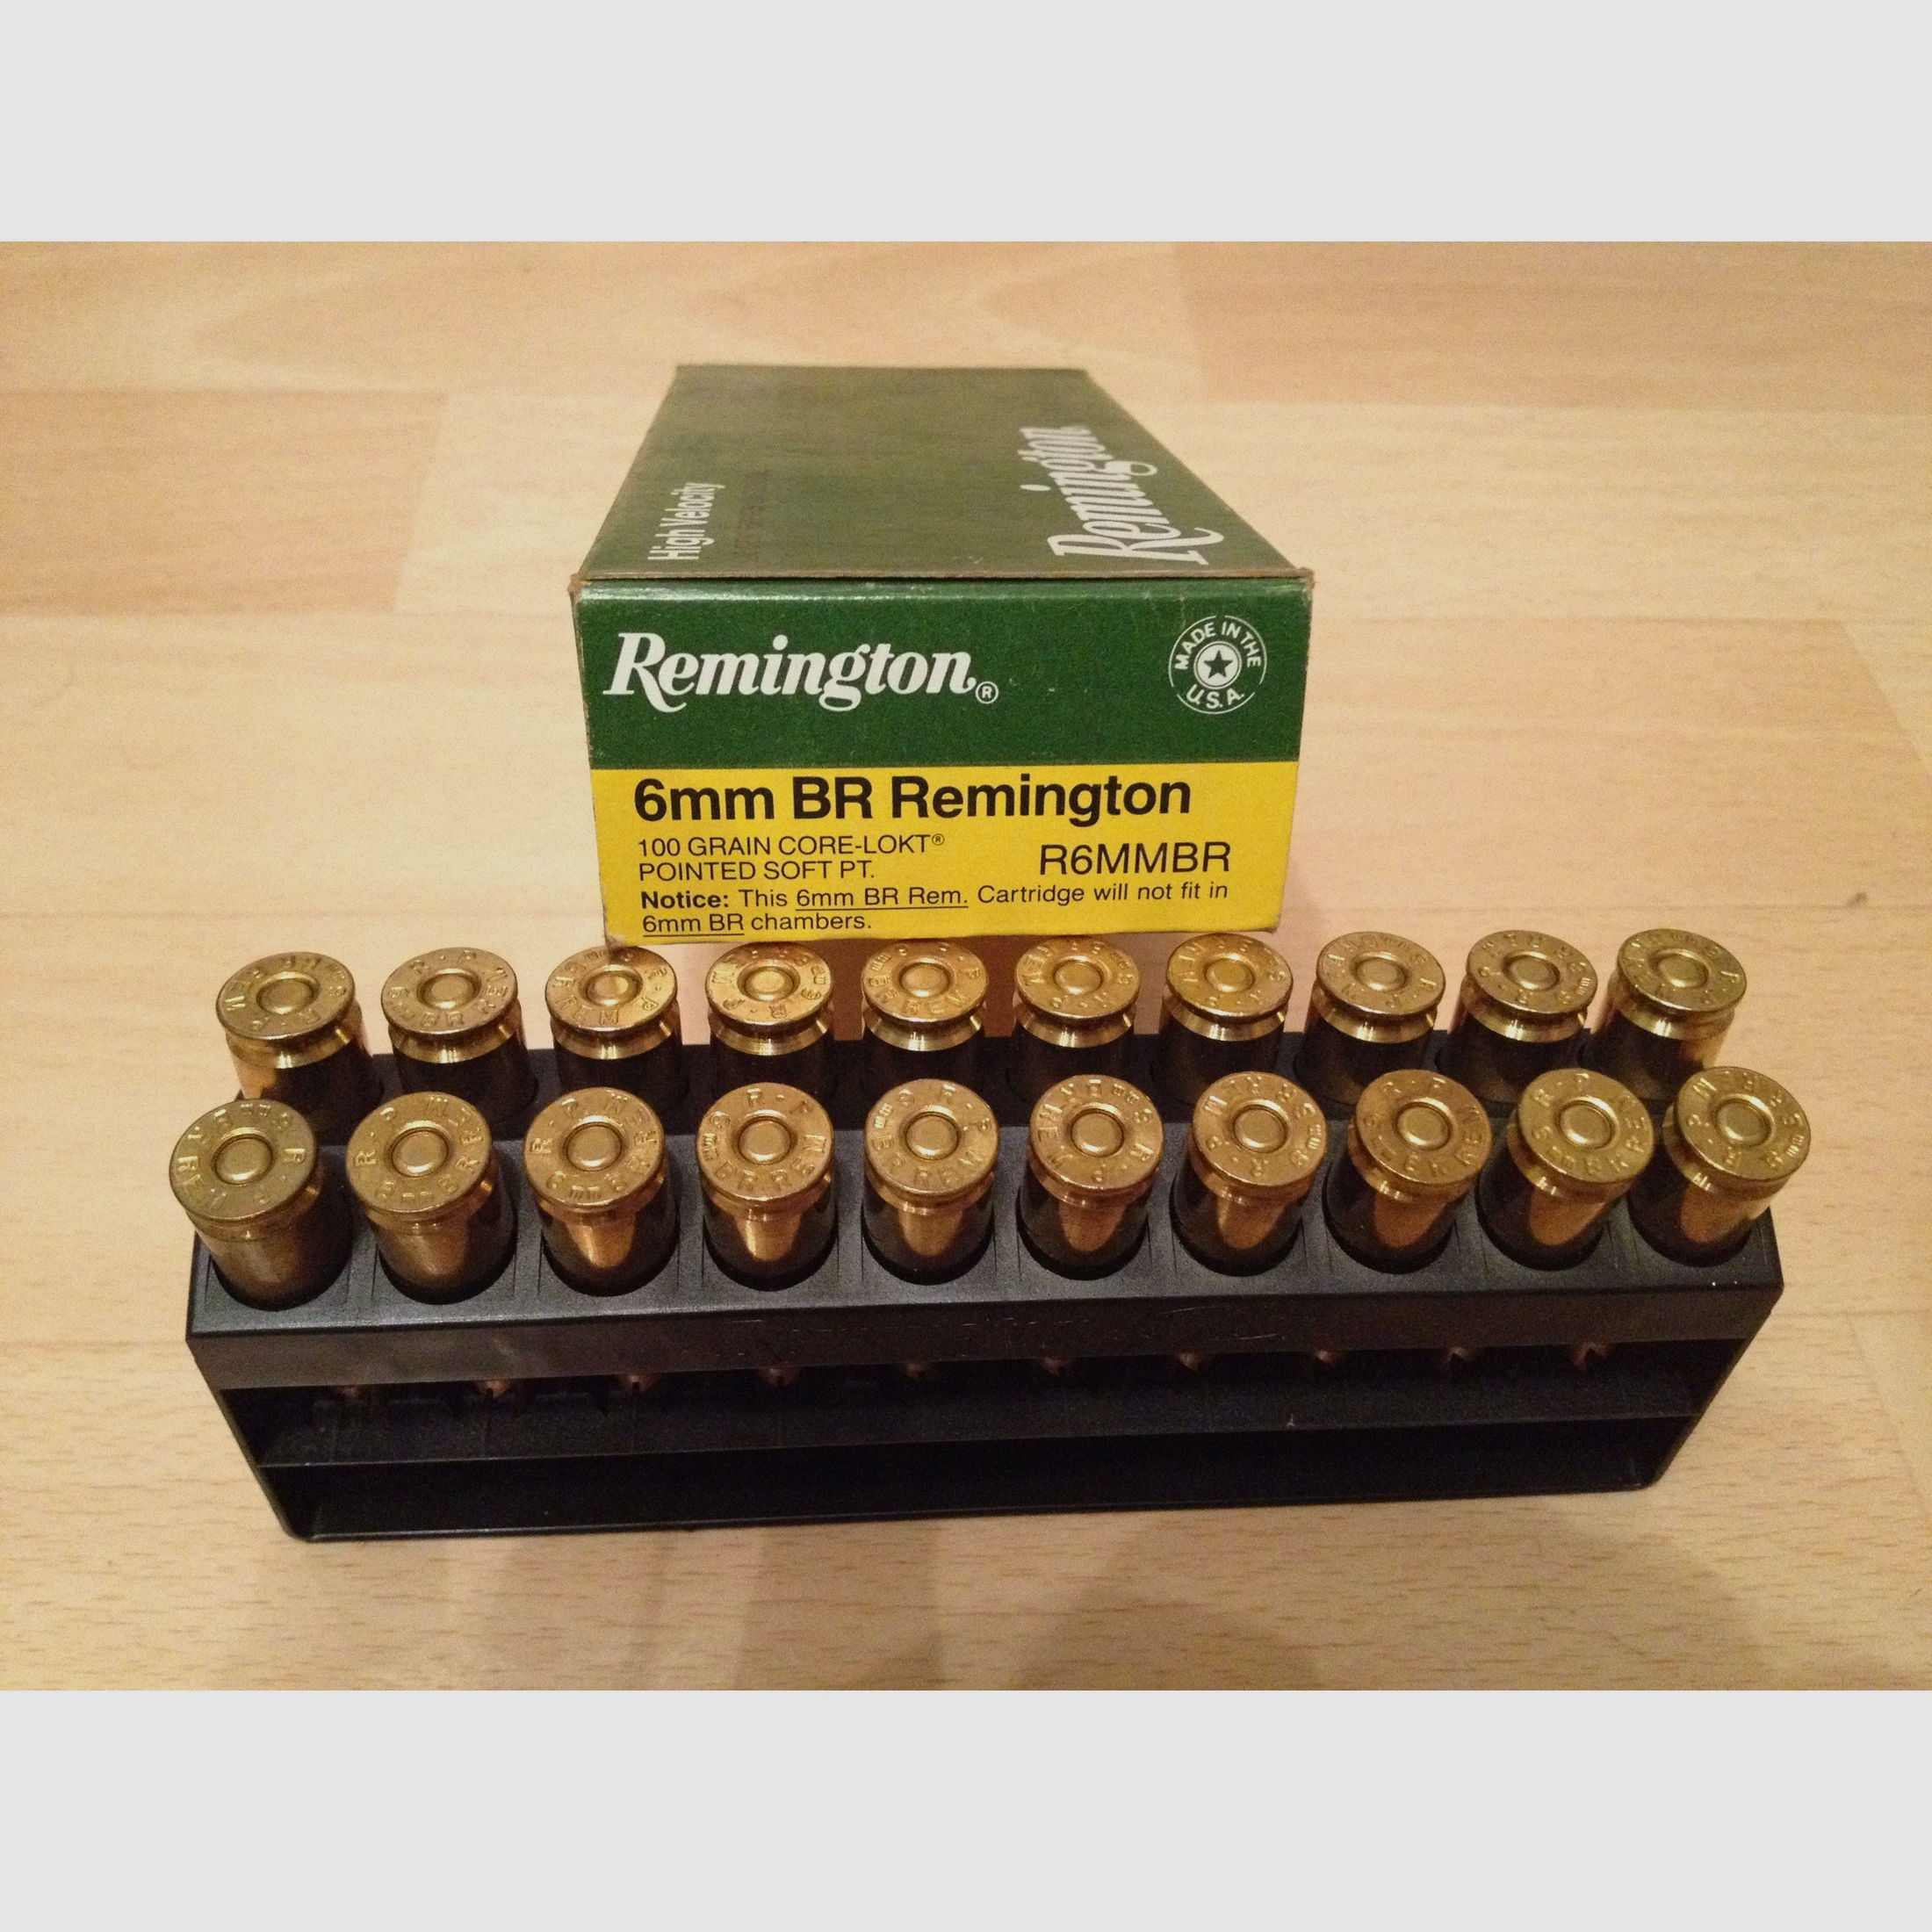 6mm BR Remington:  20 Schuss UNTERM Händlerpreis! Remington CORE-LOKT POINTED SOFT  PT